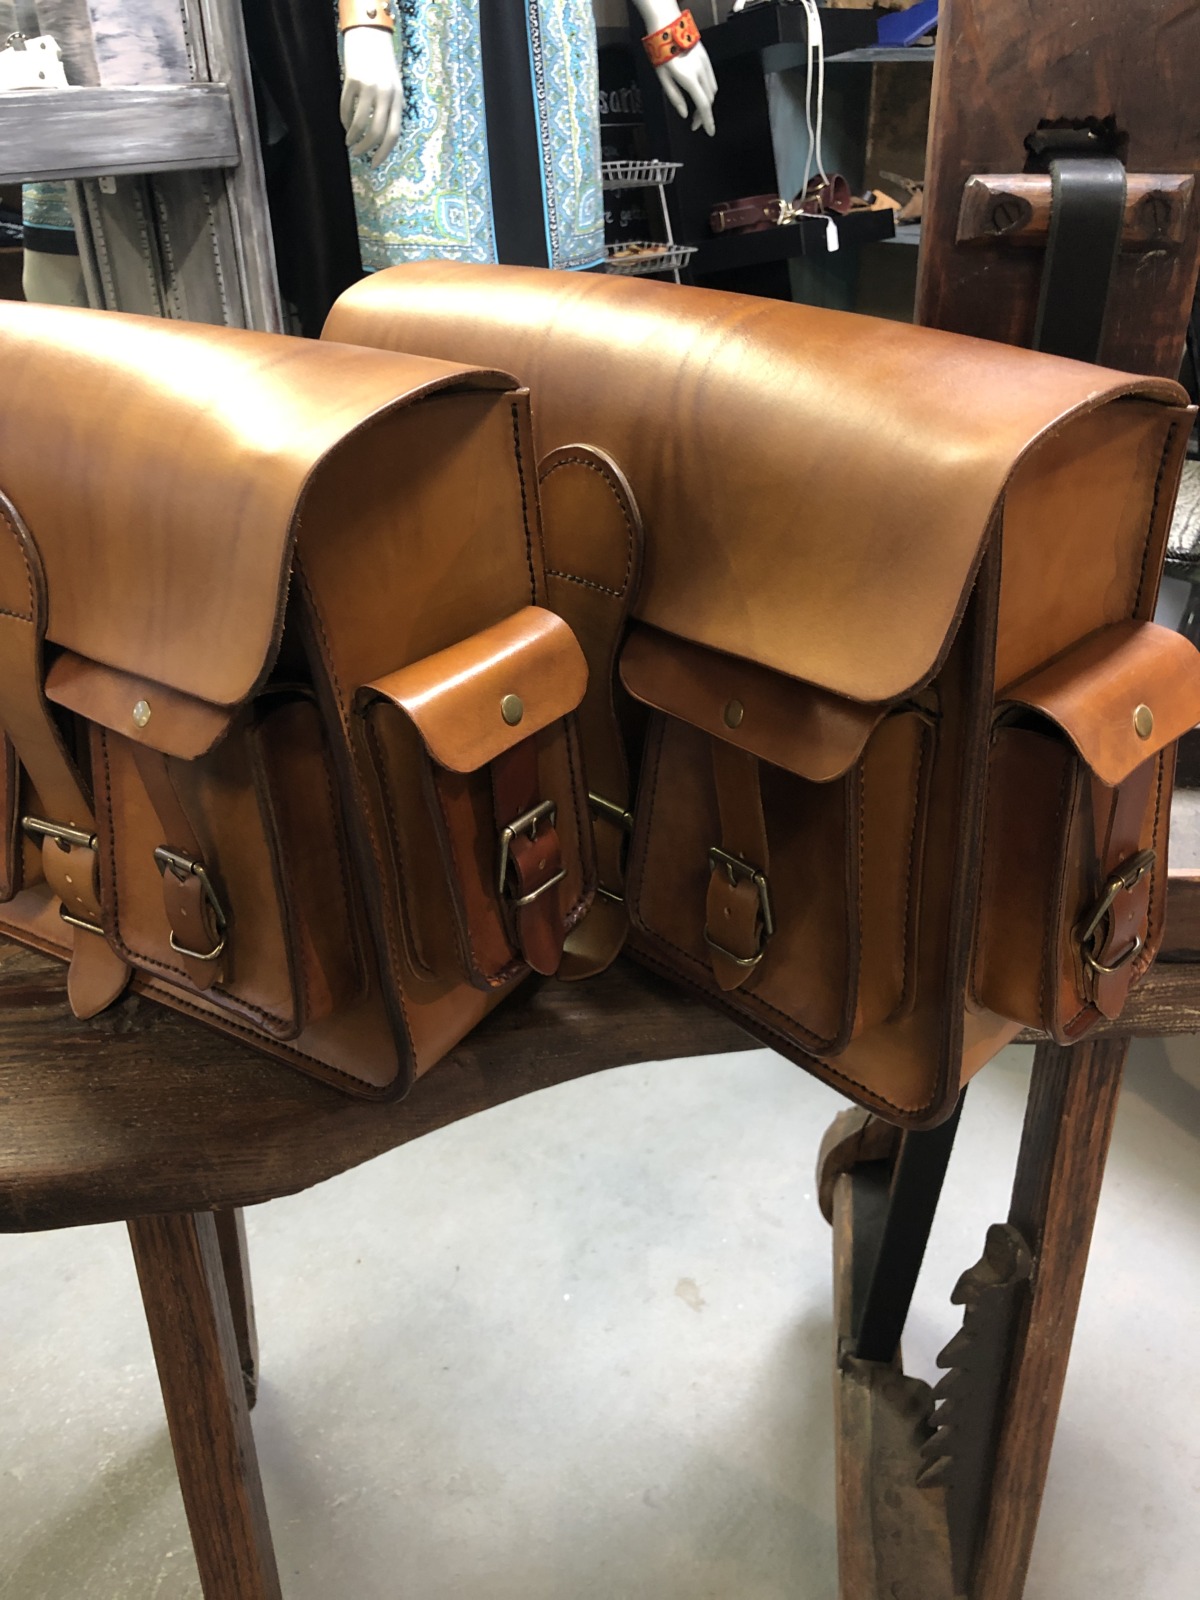 Home - McFarland Leather - Handmade Leather Gear